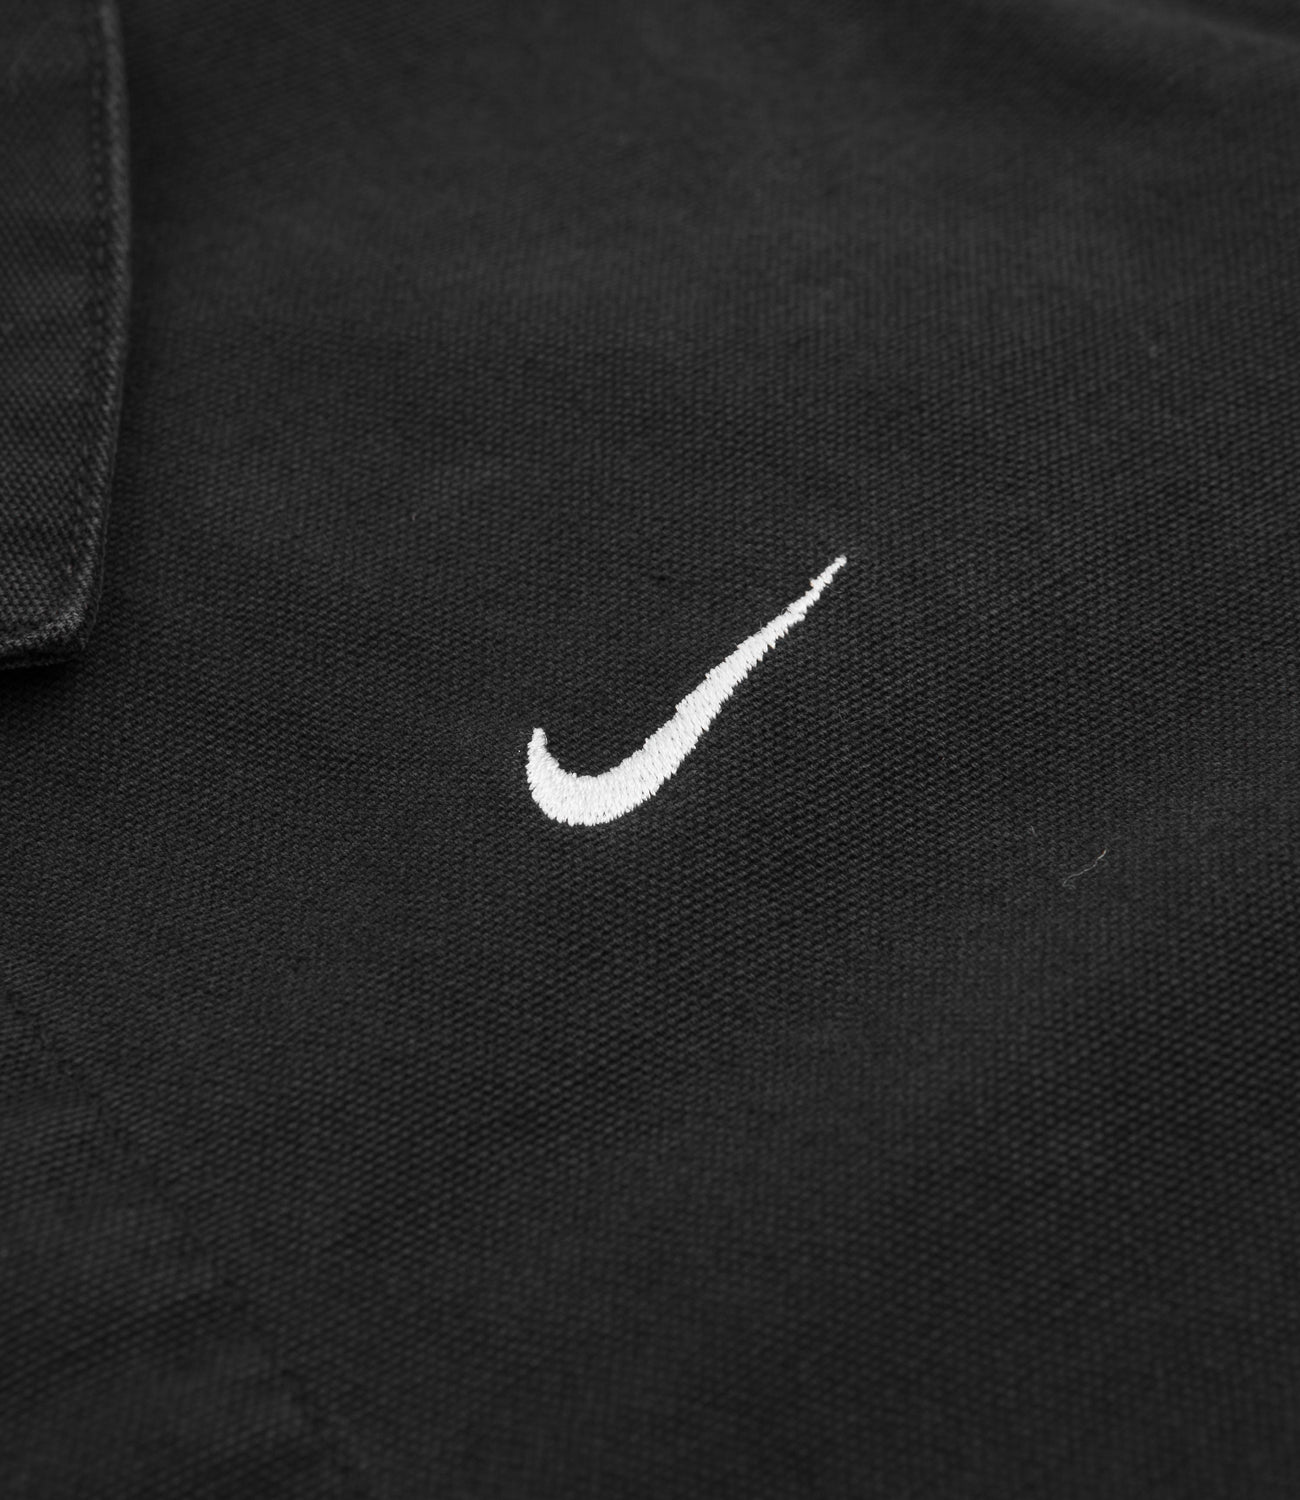 Nike Chore Coat - Black / White | Flatspot